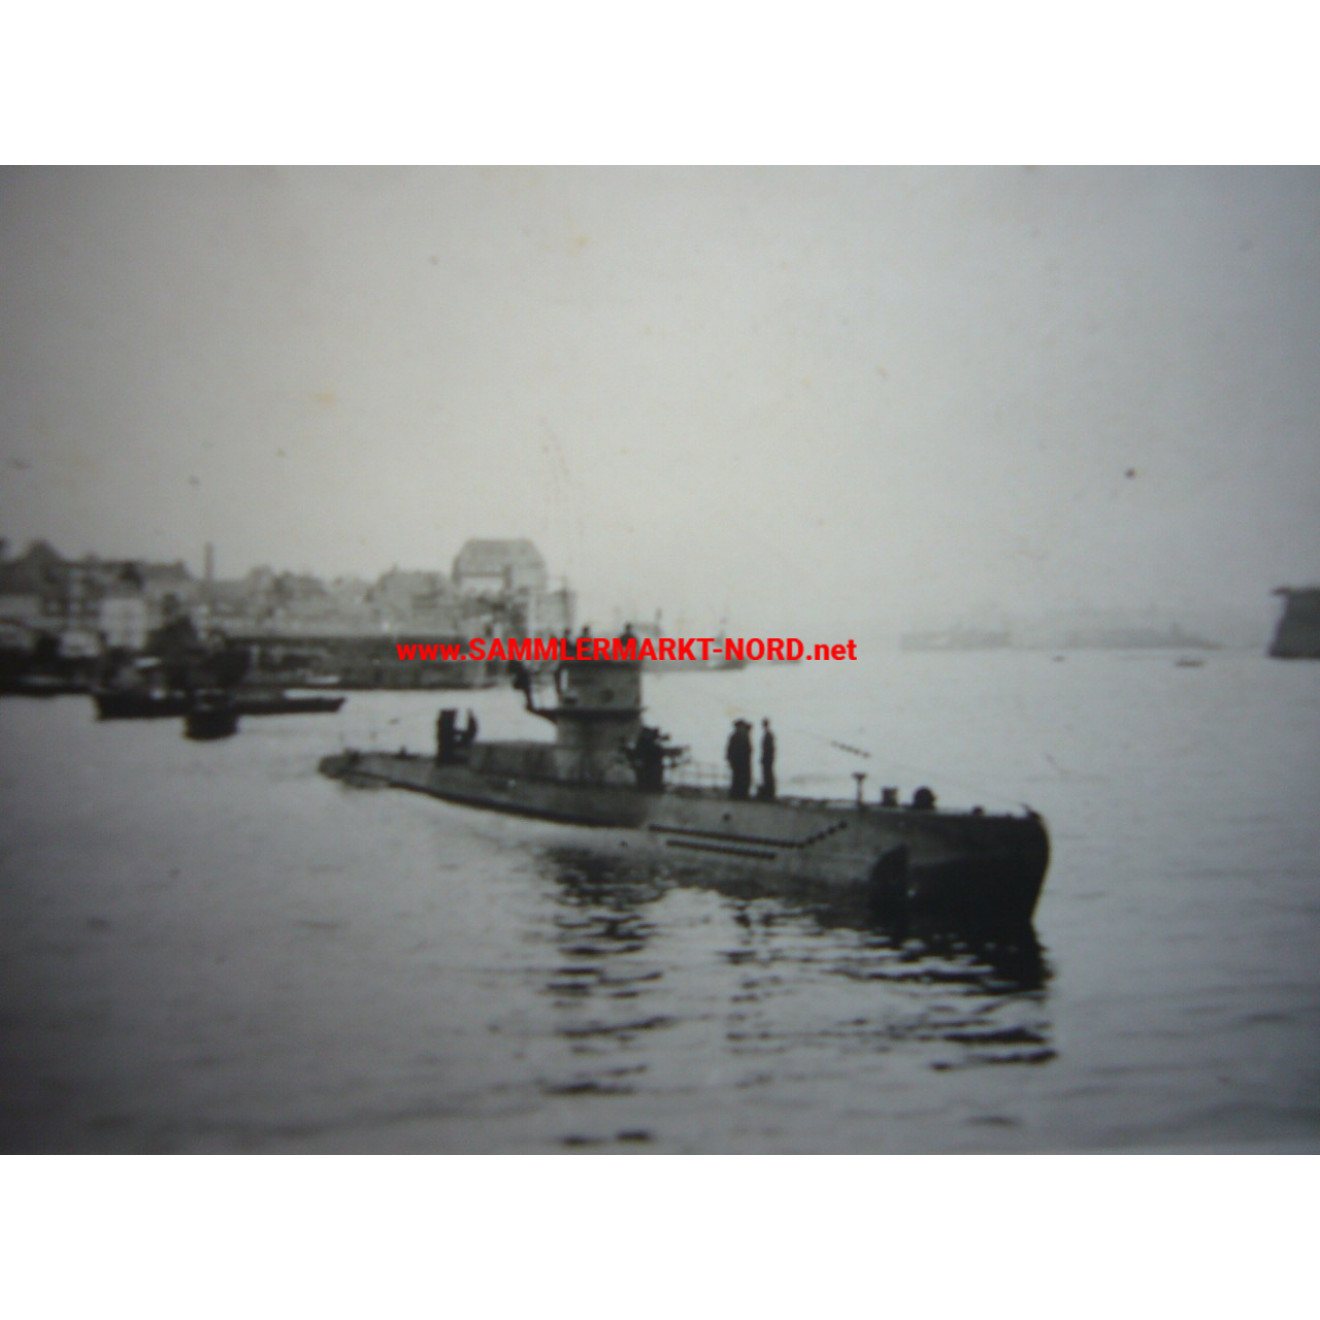 Kriegsmarine - German submarine entering harbour